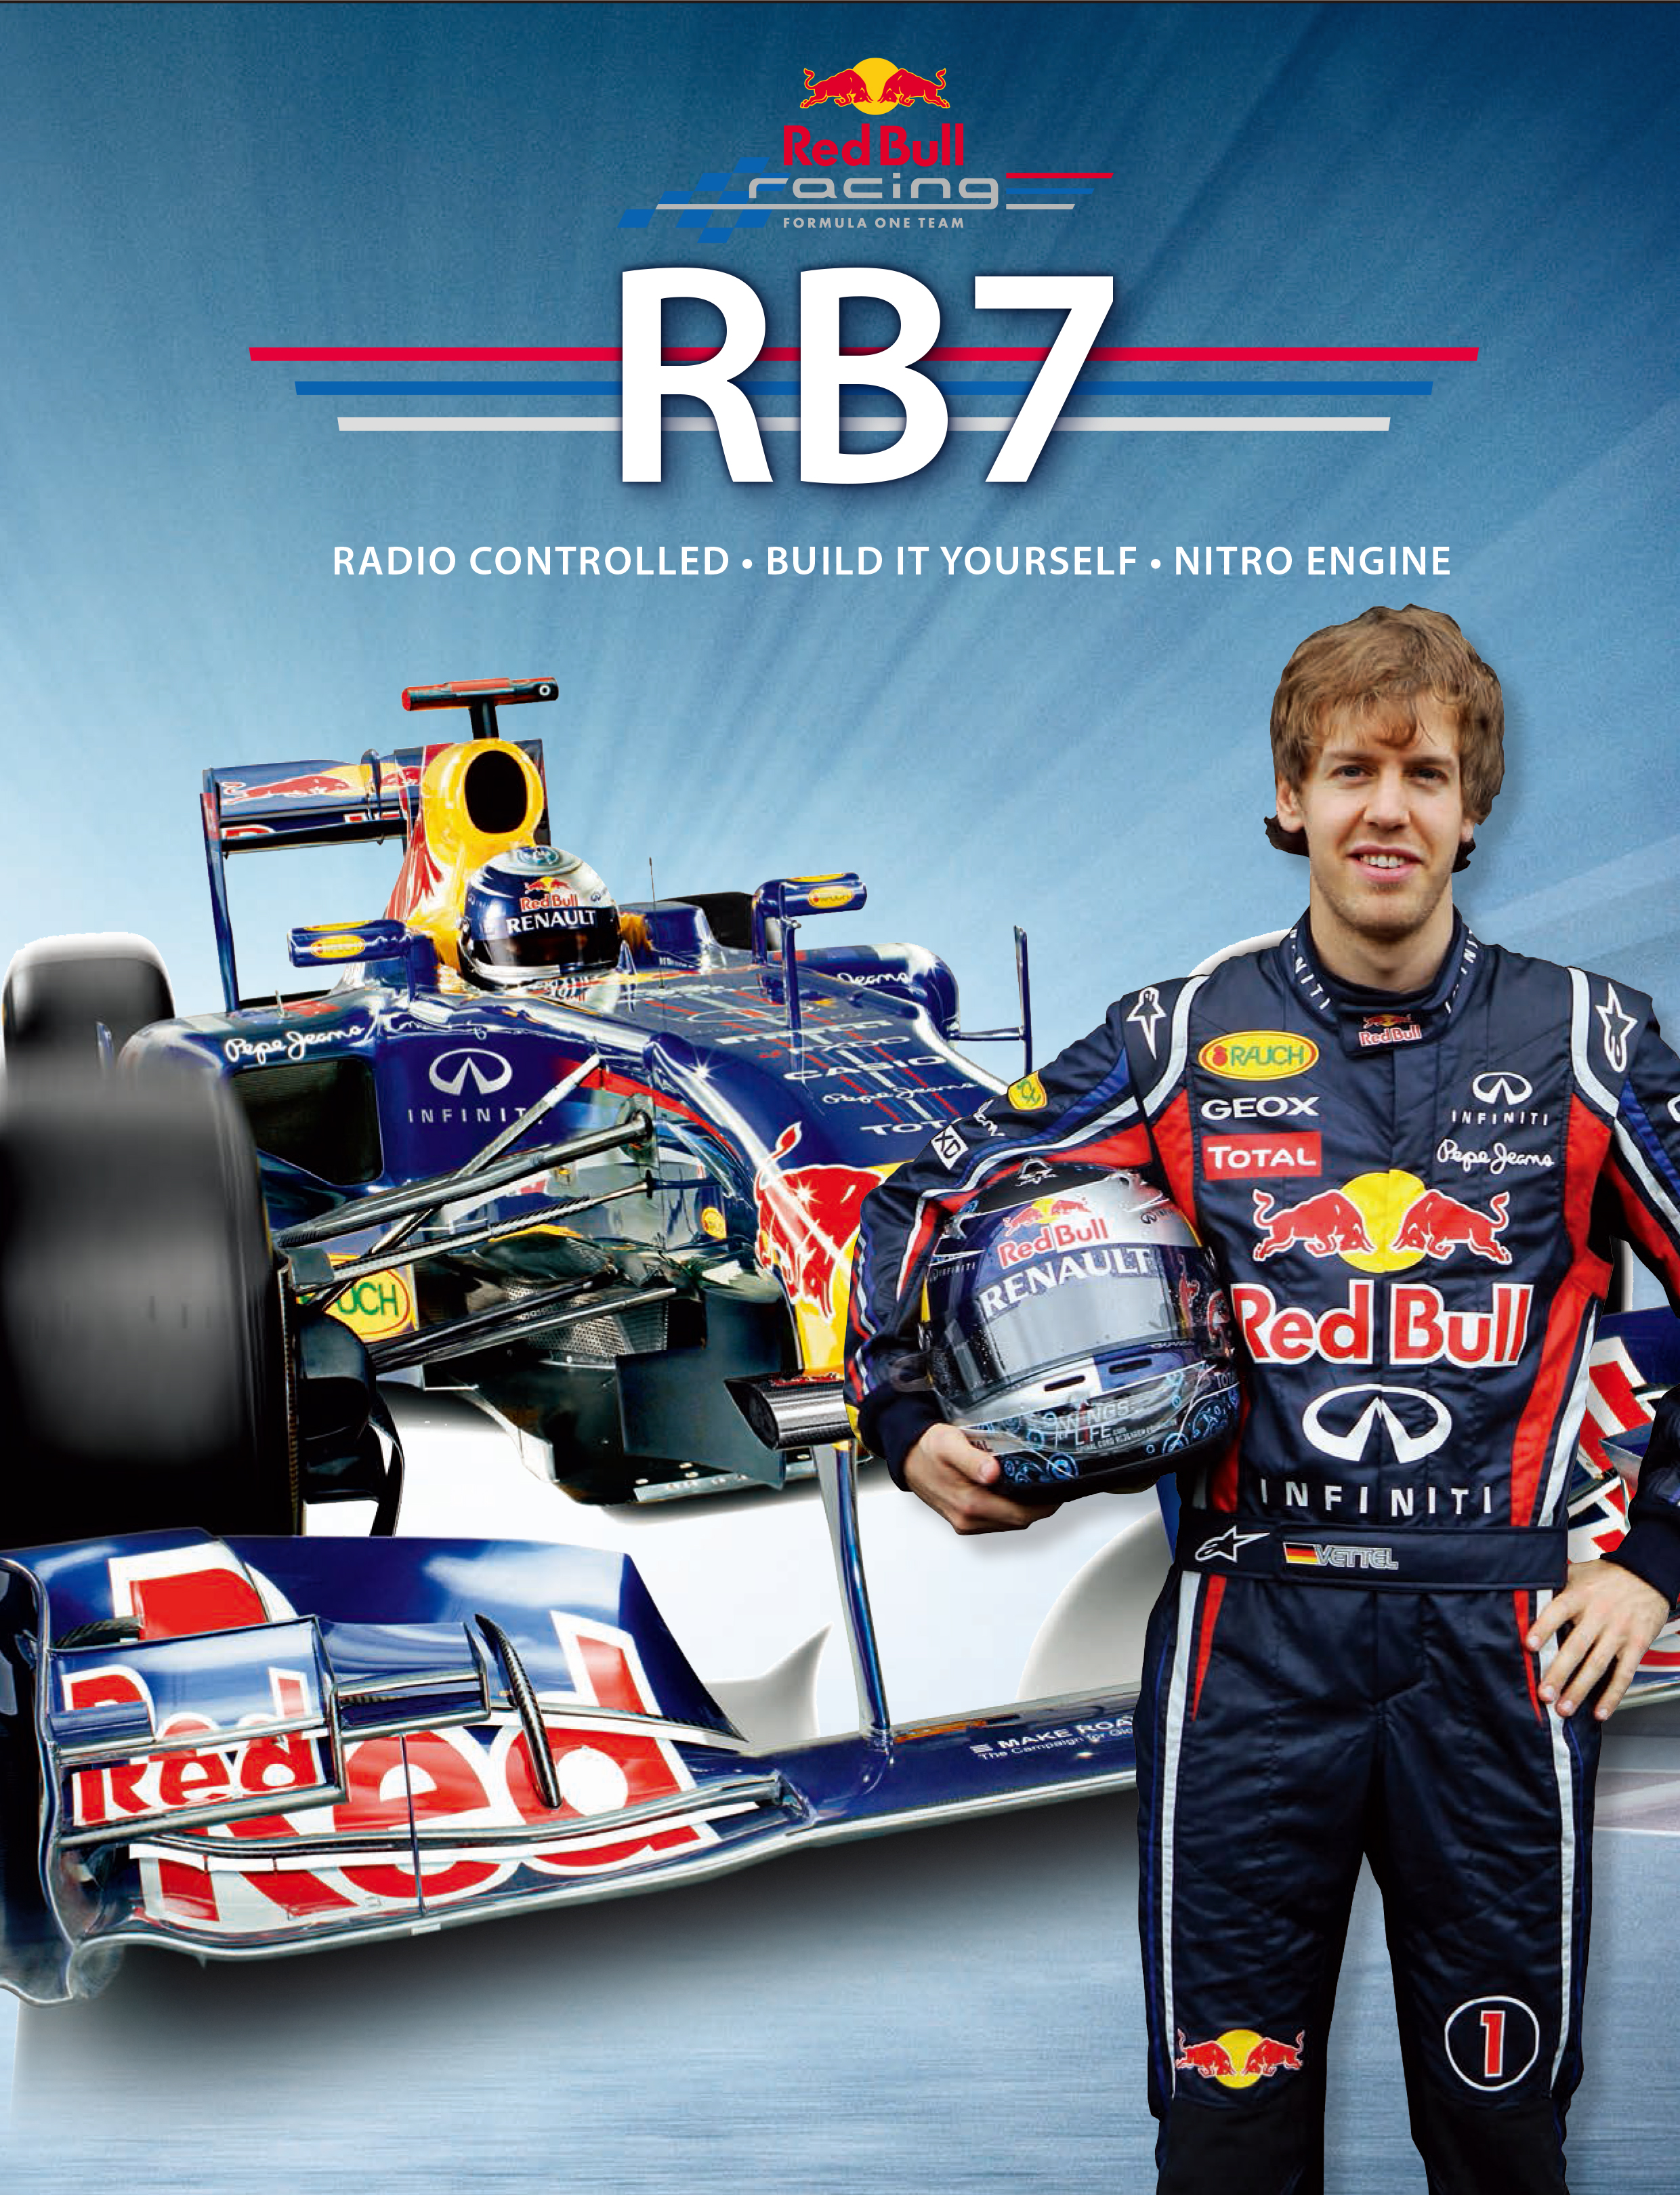 Kyosho 1:7 Scale Model Red Bull F1 Racing RB7 Nitro Remote Control Formula 1 Car.